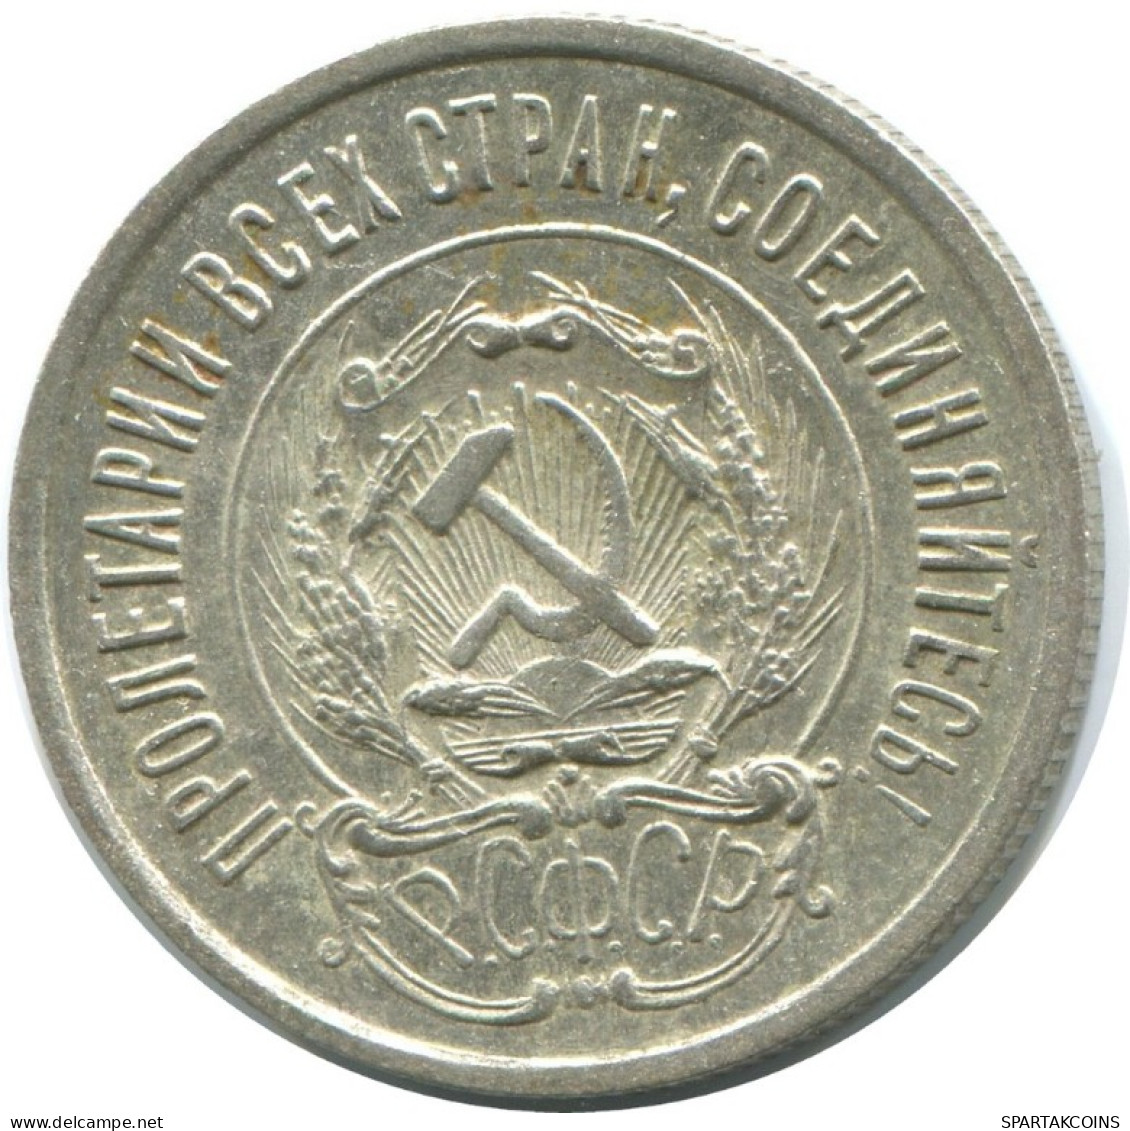 20 KOPEKS 1923 RUSSLAND RUSSIA RSFSR SILBER Münze HIGH GRADE #AF609.D.A - Russland